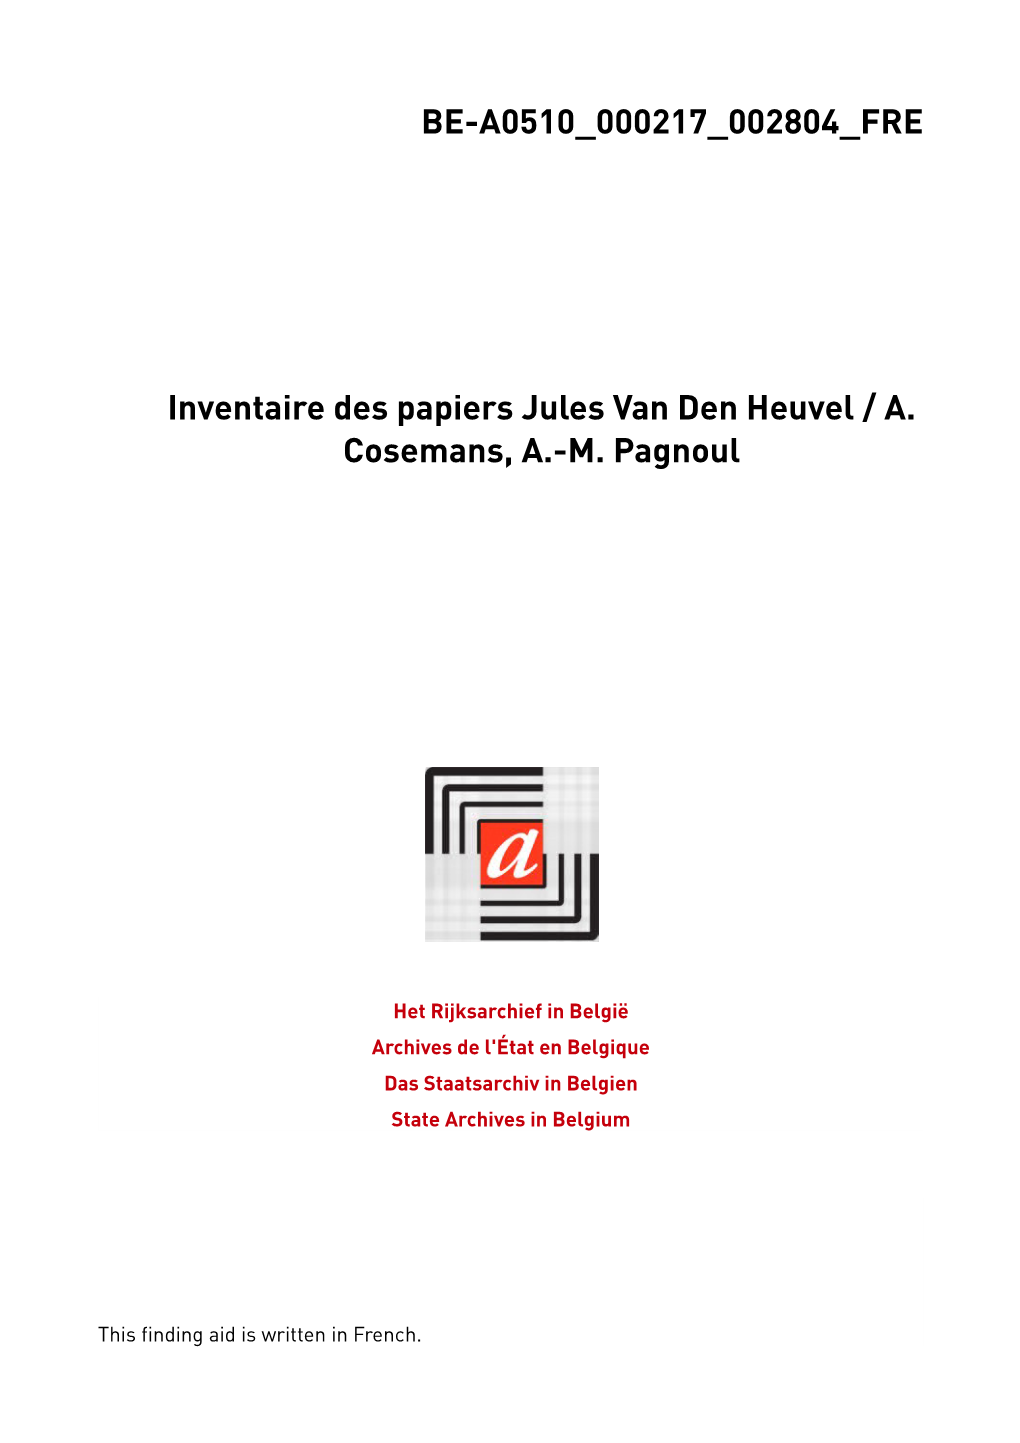 Jules Van Den Heuvel / A